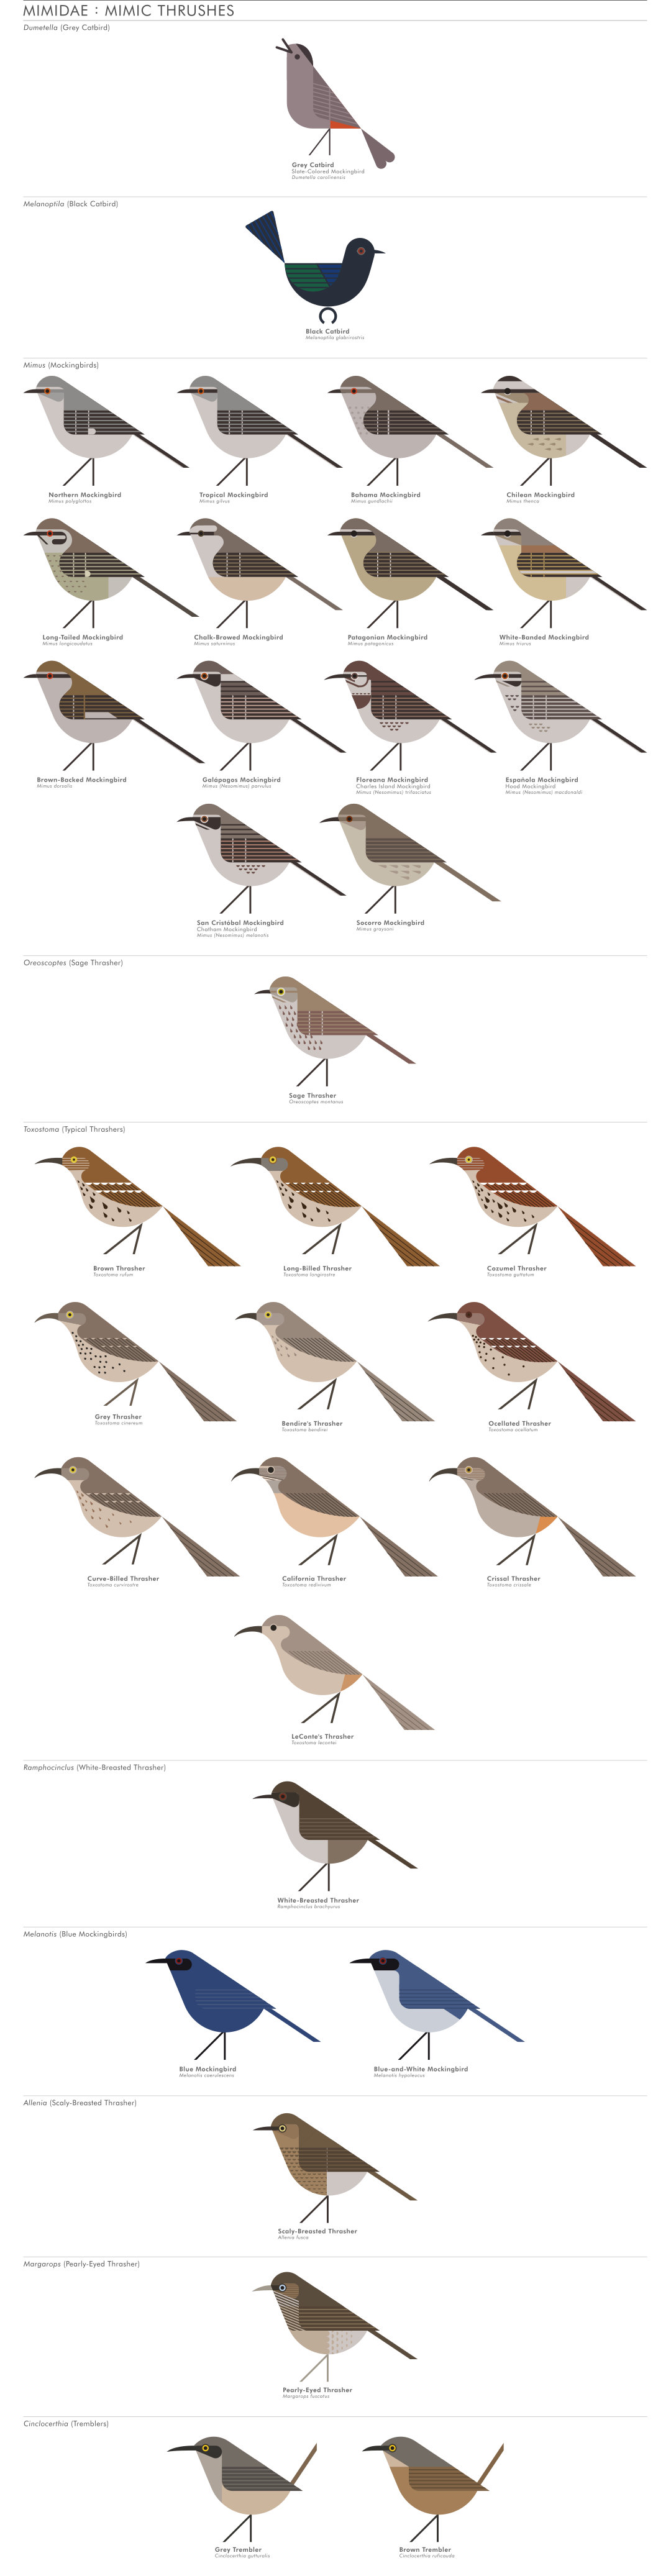 scott partridge - AVE - avian vector encyclopedia - mimids - bird vector art